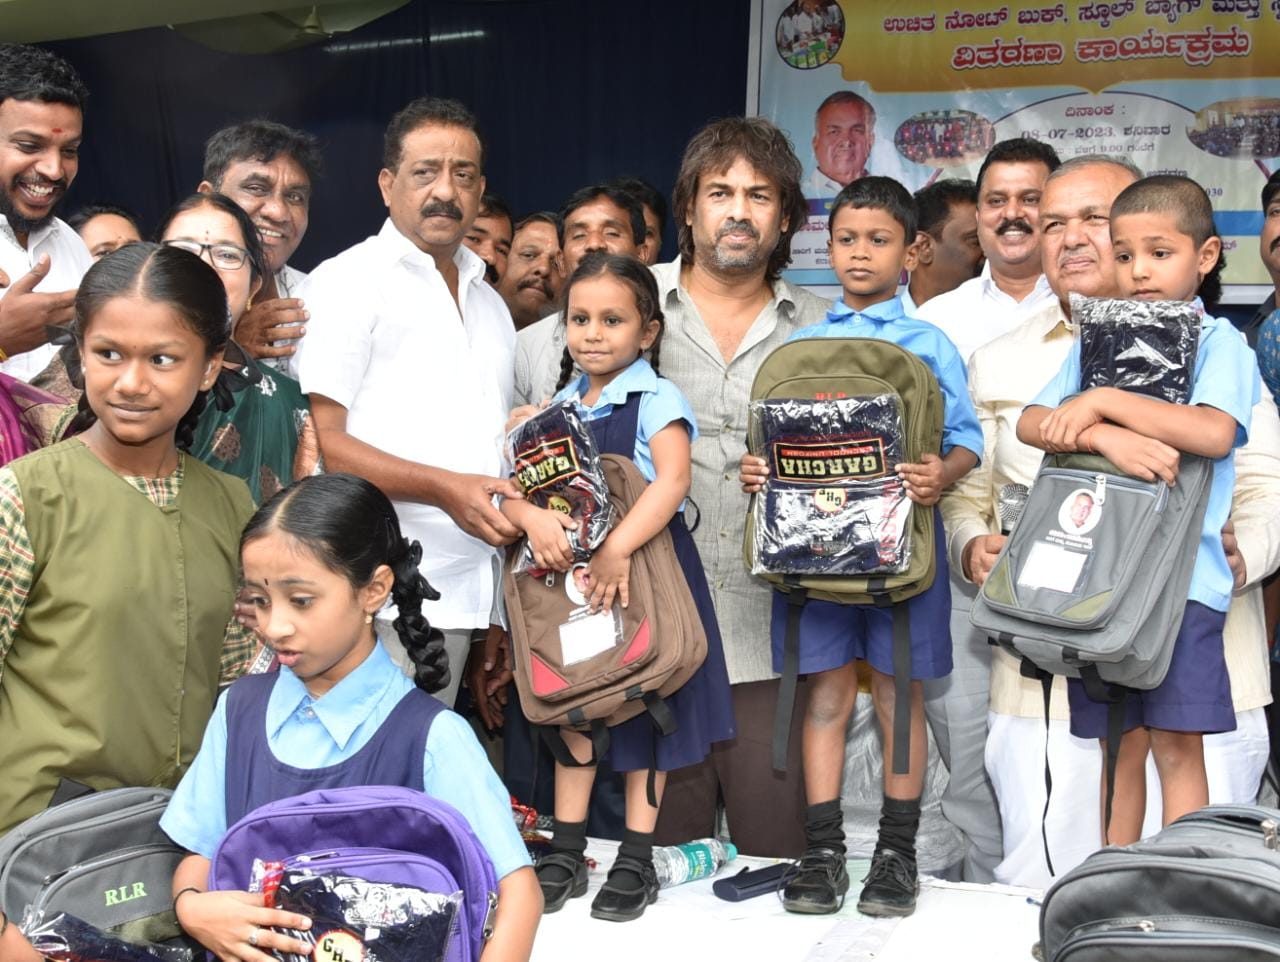 Egg donation program is very helpful for children: Minister Madhu Bangarappa